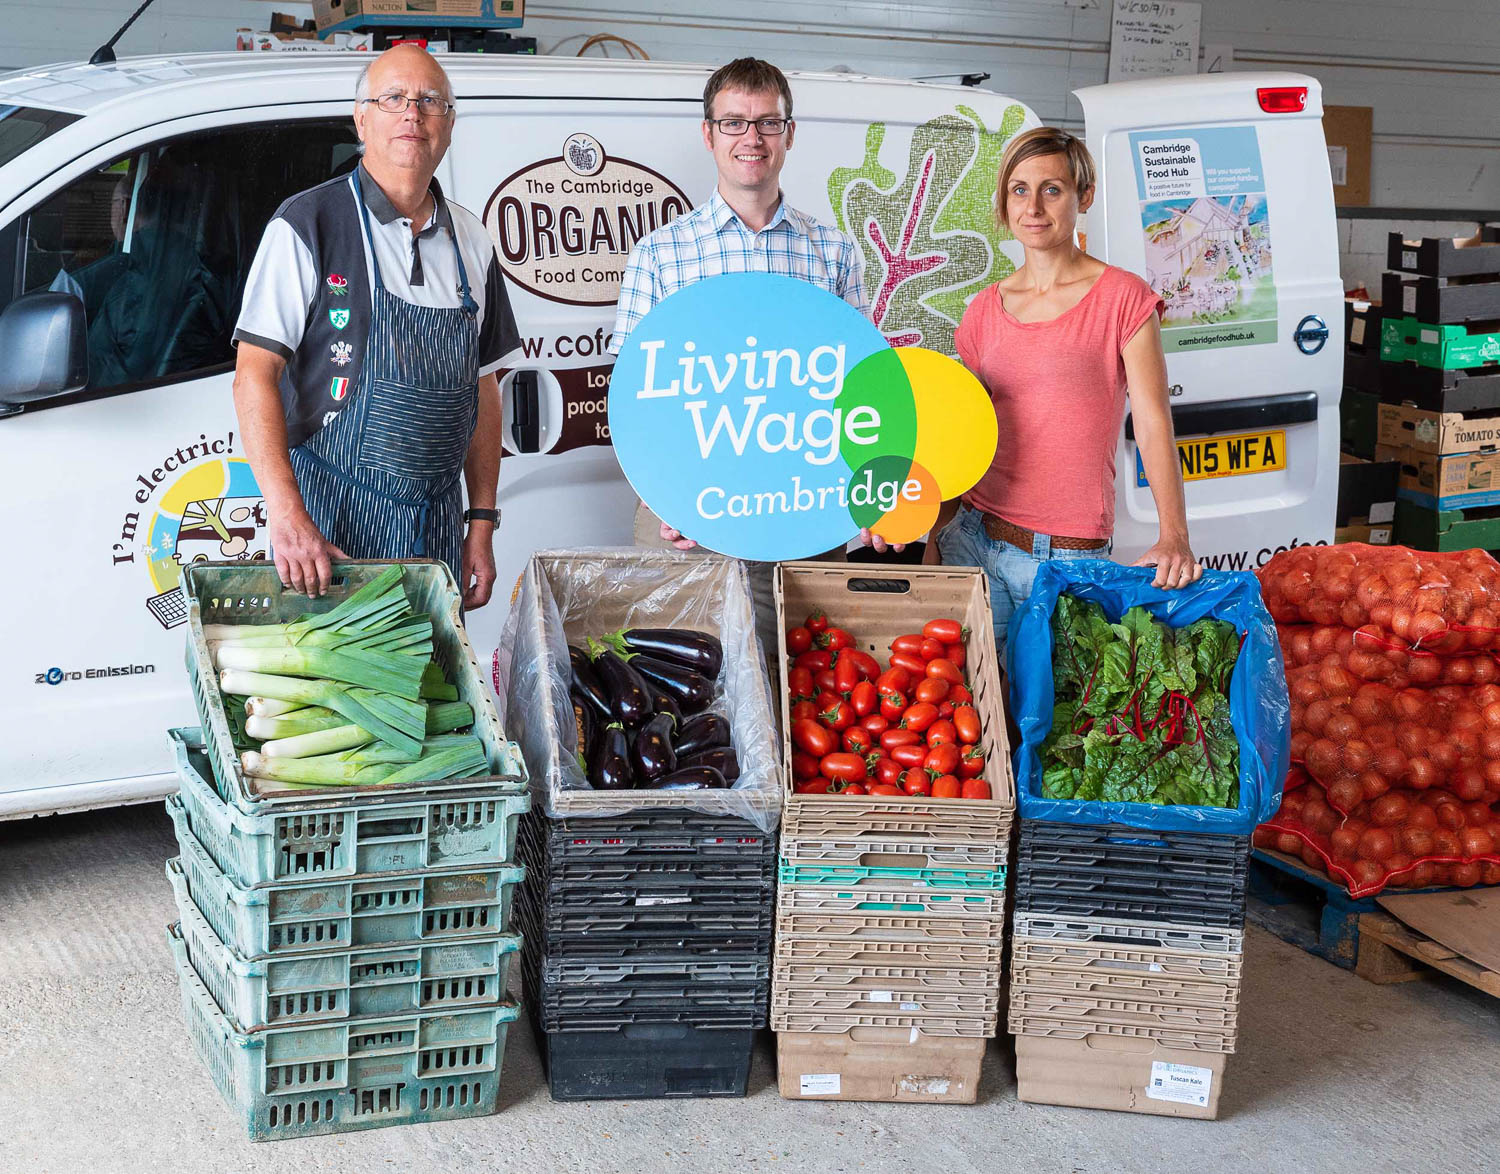  Living Wage at Cambridge Organic Food Company